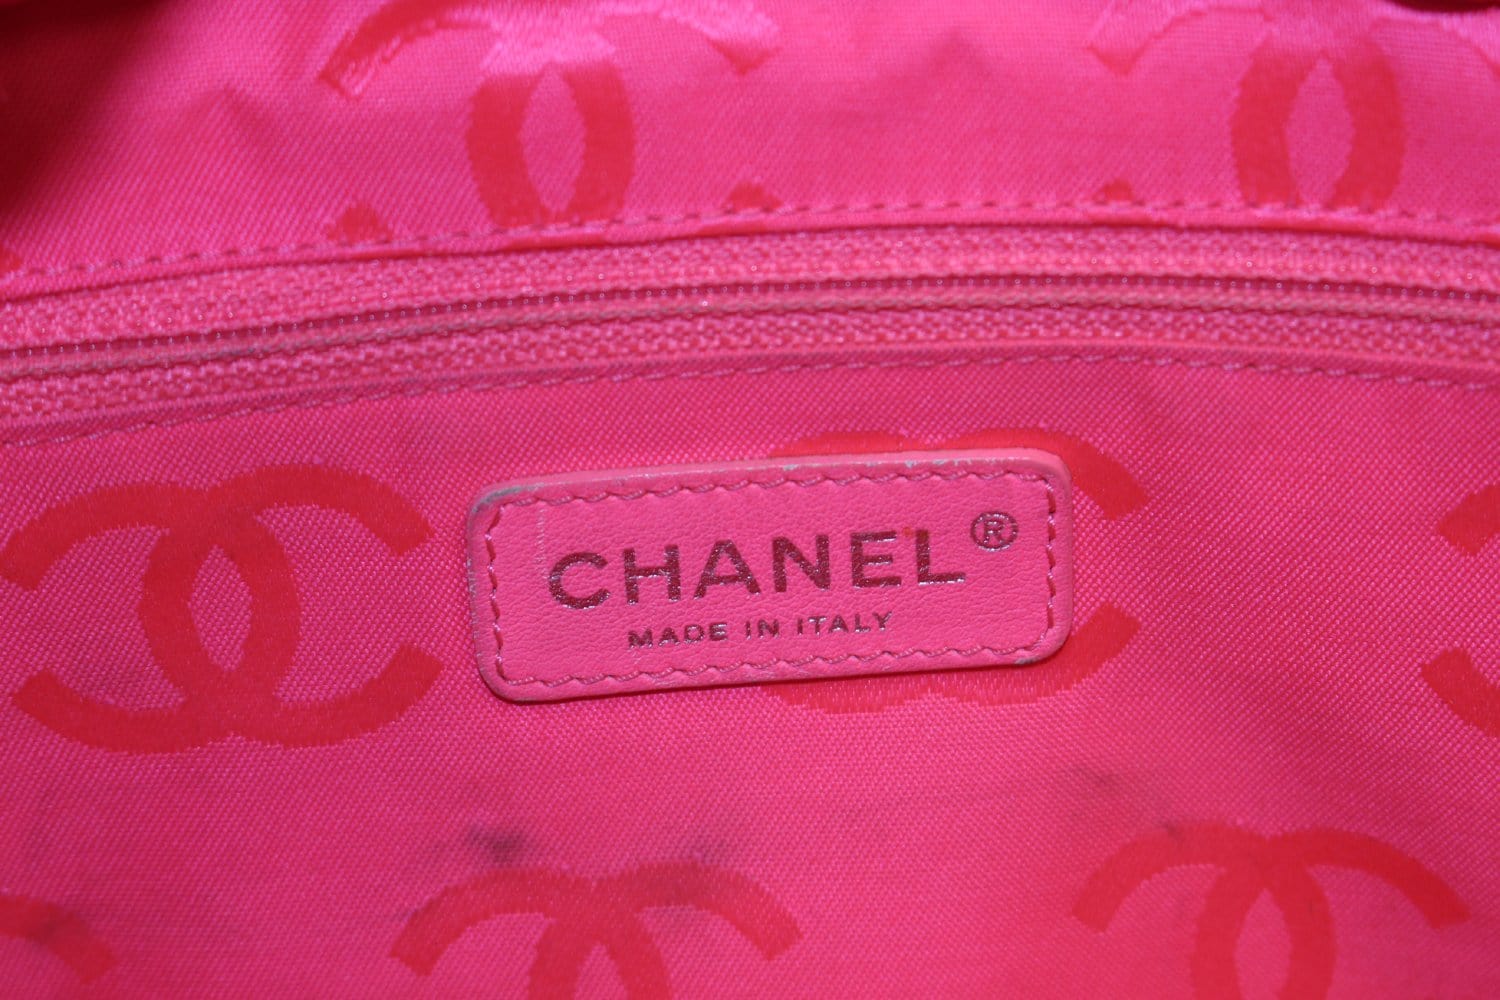 Best 25+ Deals for Black Patent Leather Chanel Bag